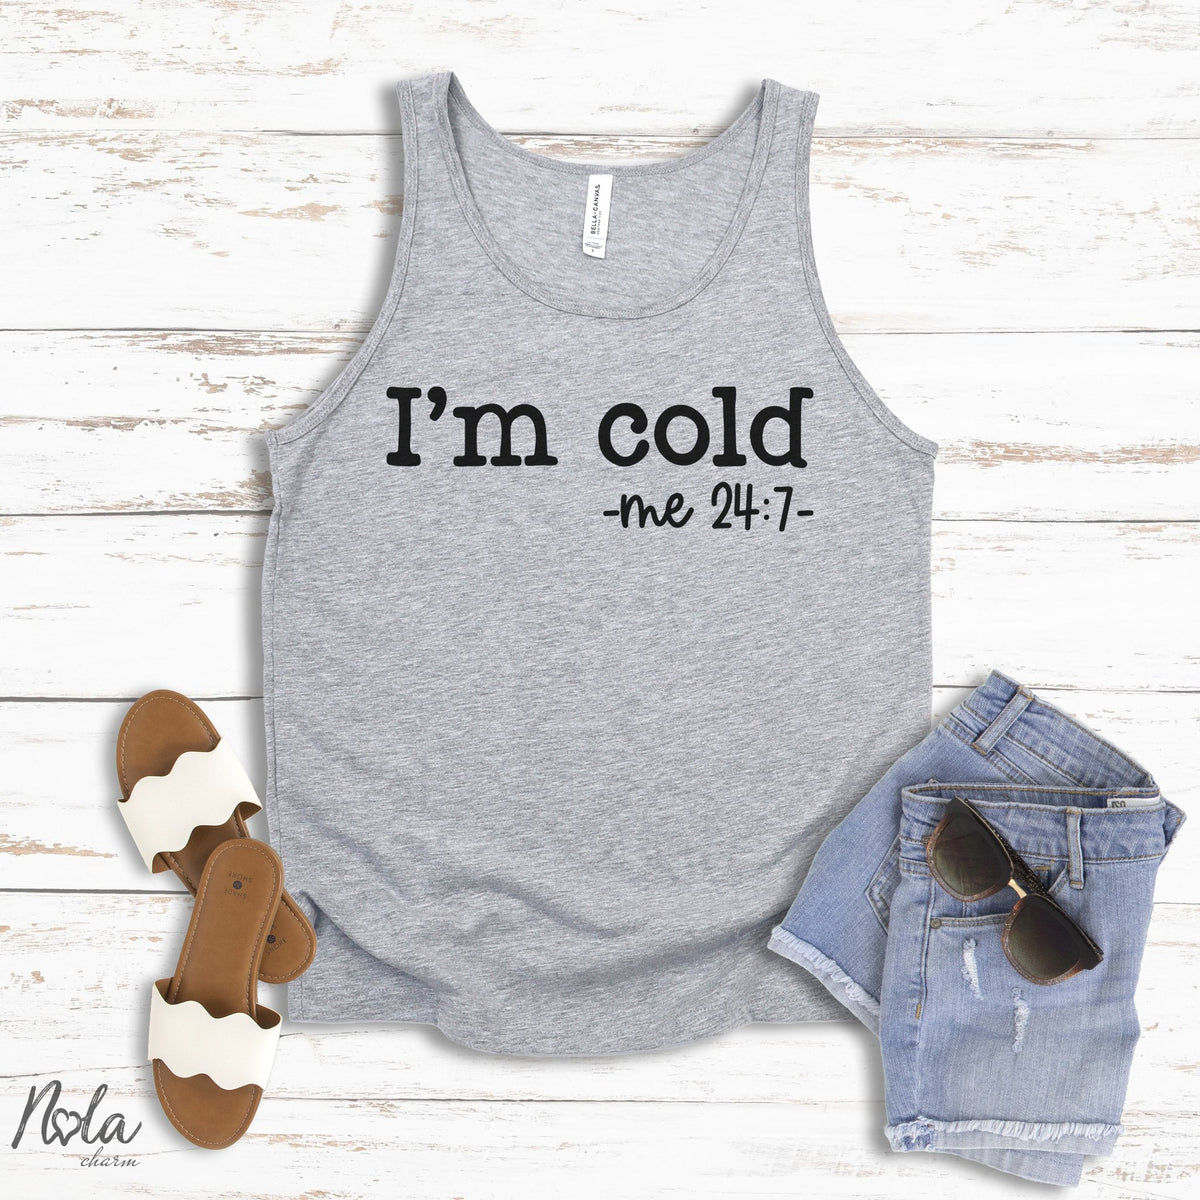 I'm Cold 24:7 - Nola Charm